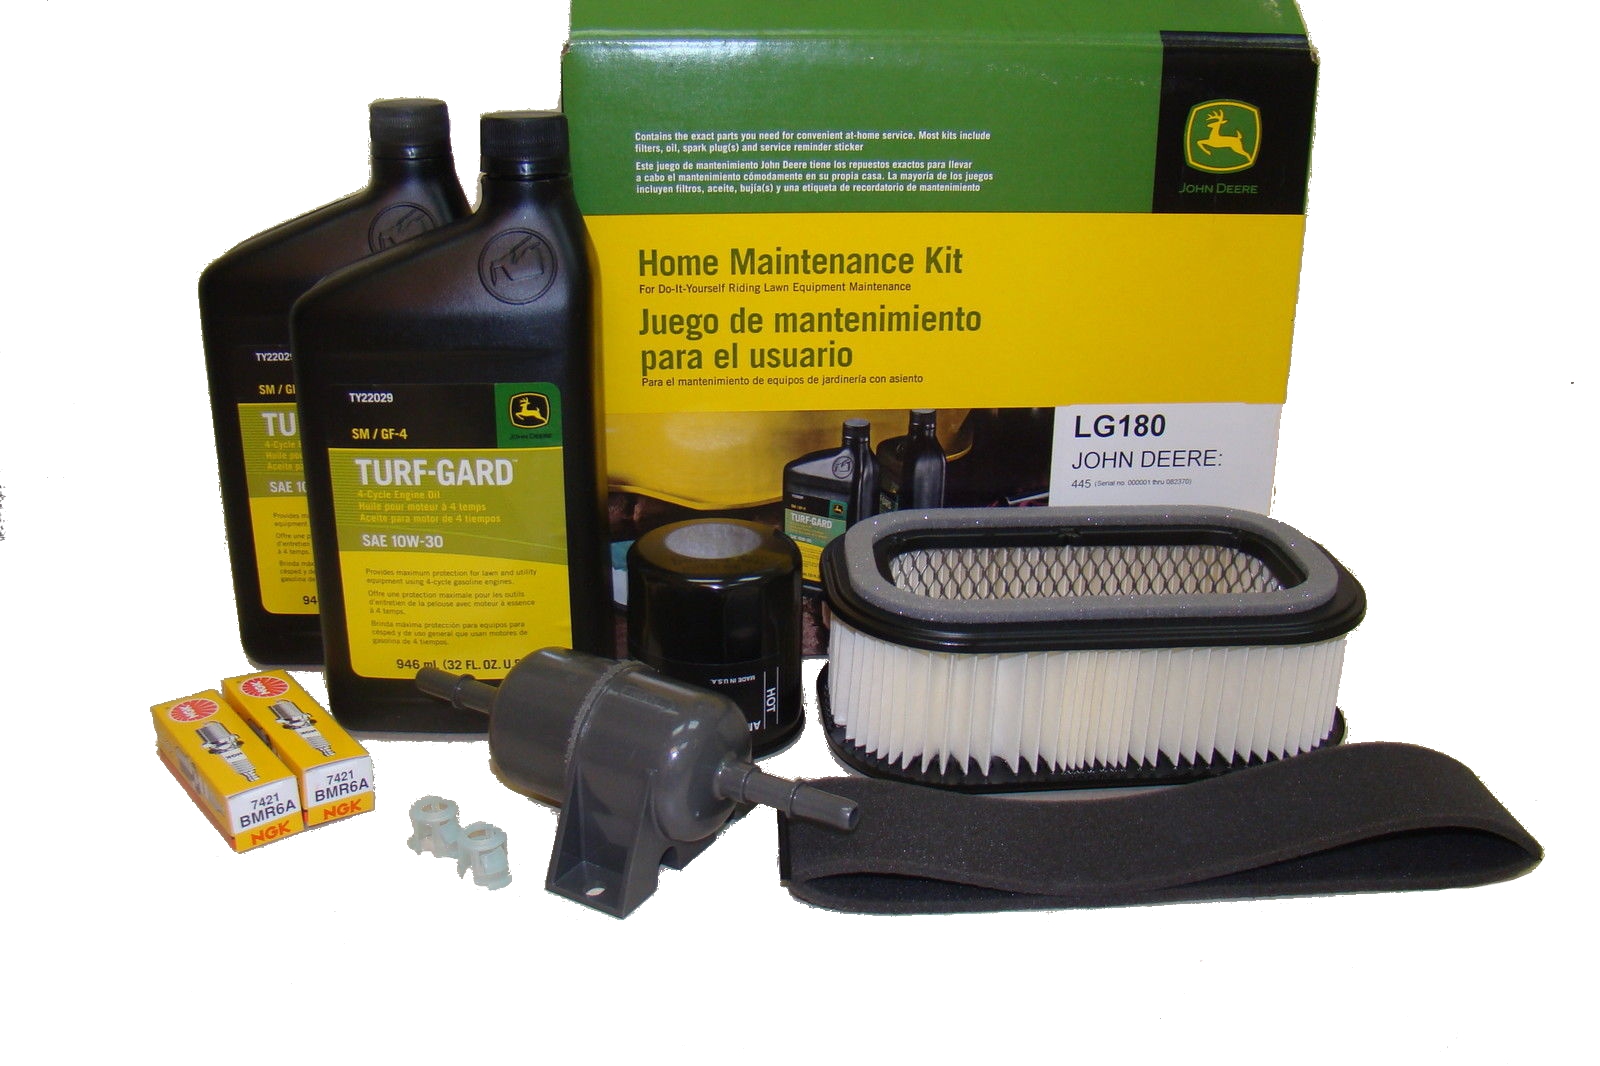 John Deere 445 Lawnmower Home Maintenance Kit LG180 | eBay